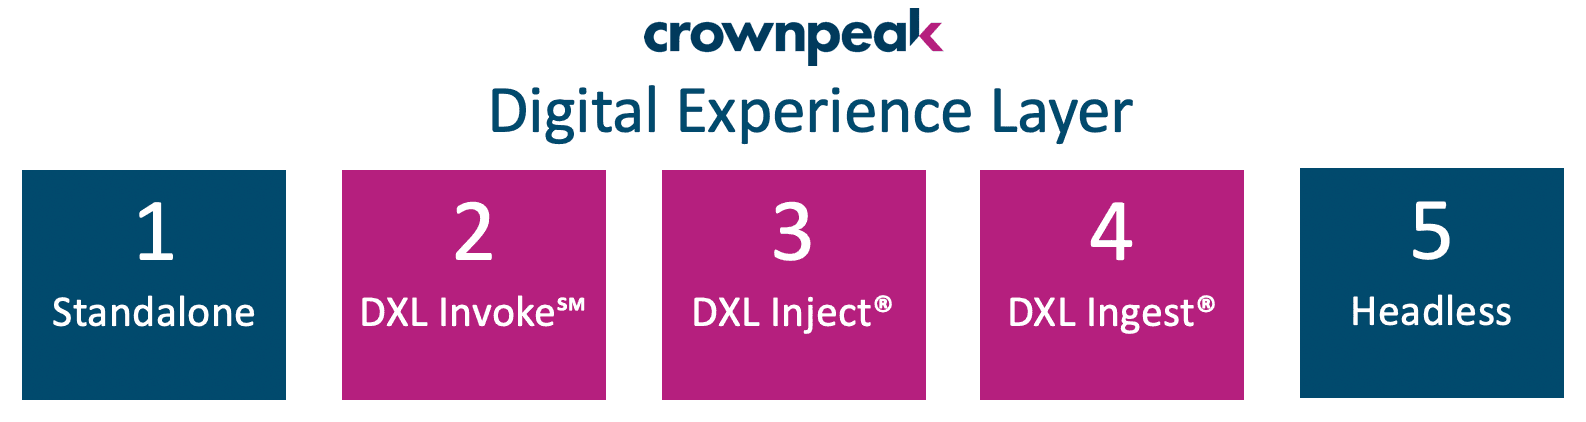 The Crownpeak Digital Experience Layer - List of Patterns